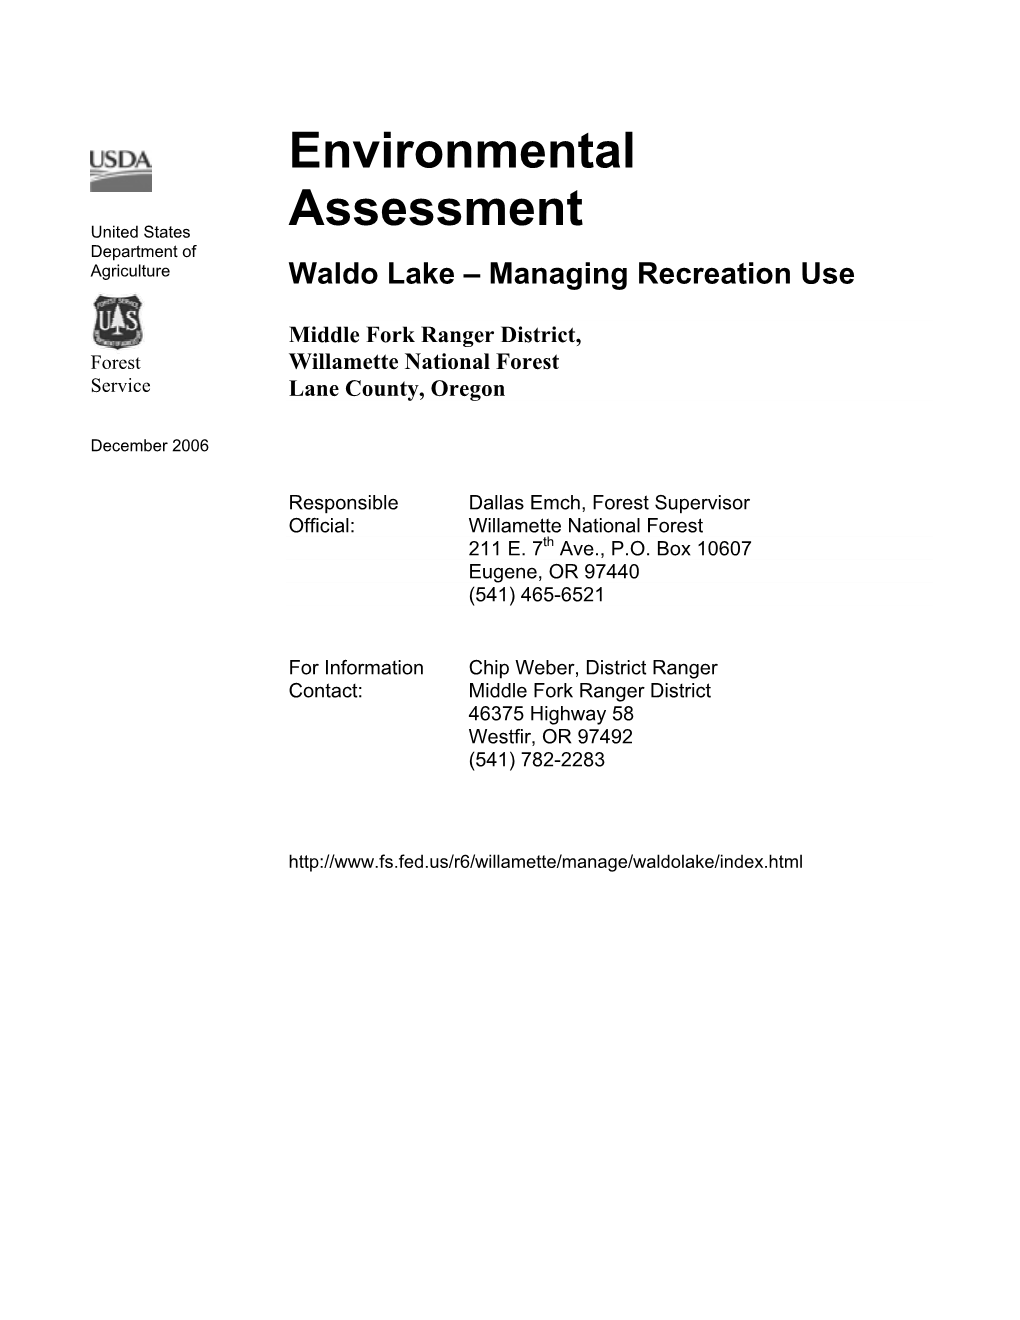 Environmental Assessment Waldo Lake Recreation Use